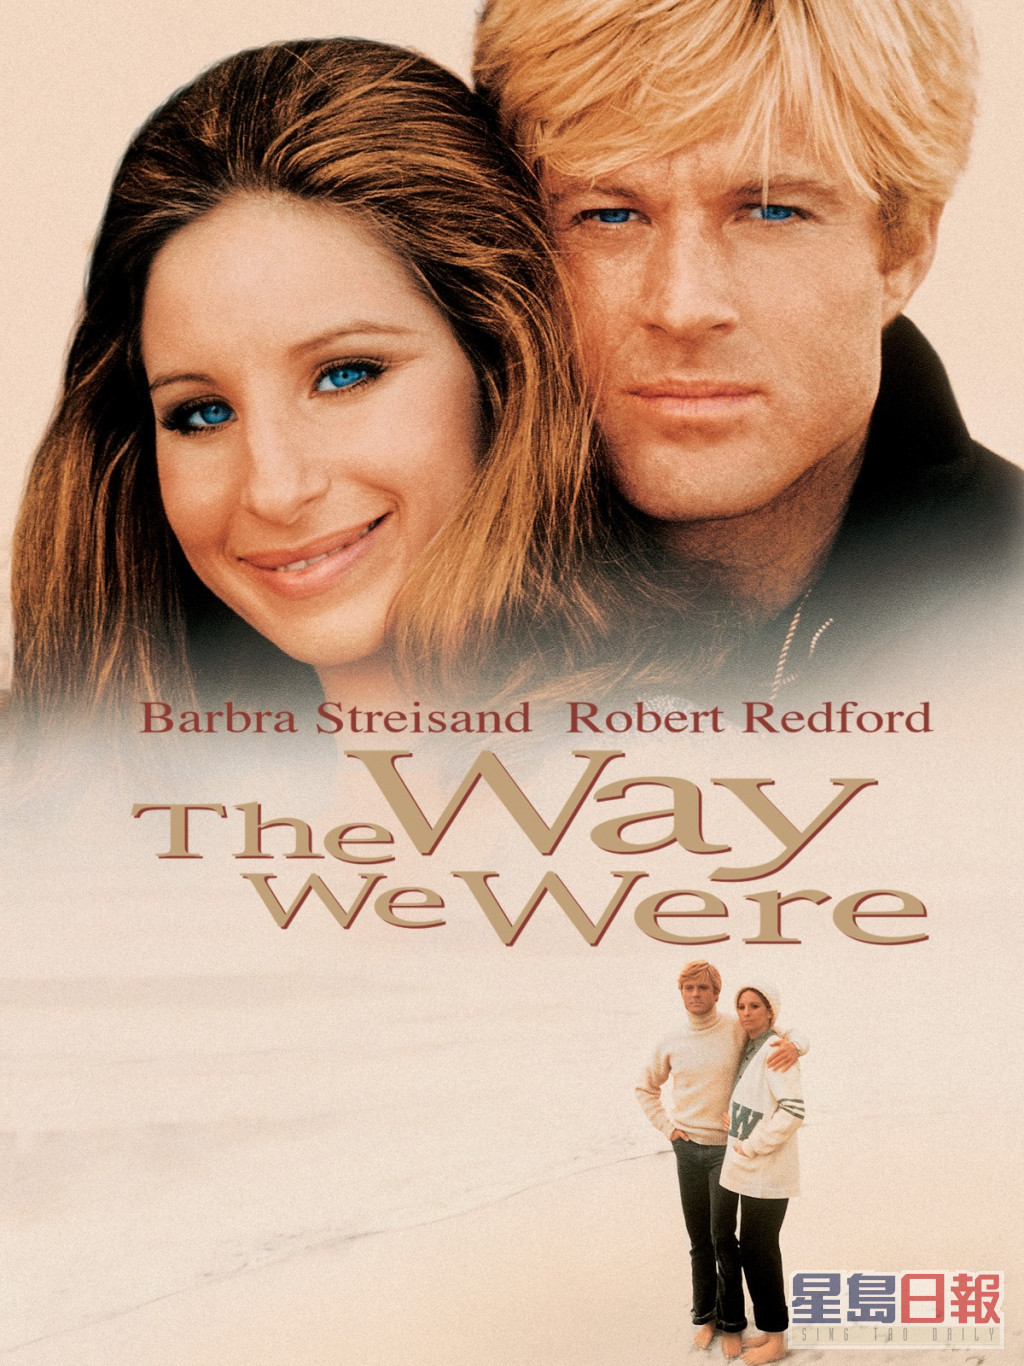 Marilyn Bergman夫妇有份创作《俏郎君》电影歌曲《The Way We Were》，并赢得奥斯卡，此原声大碟再夺格林美奖。